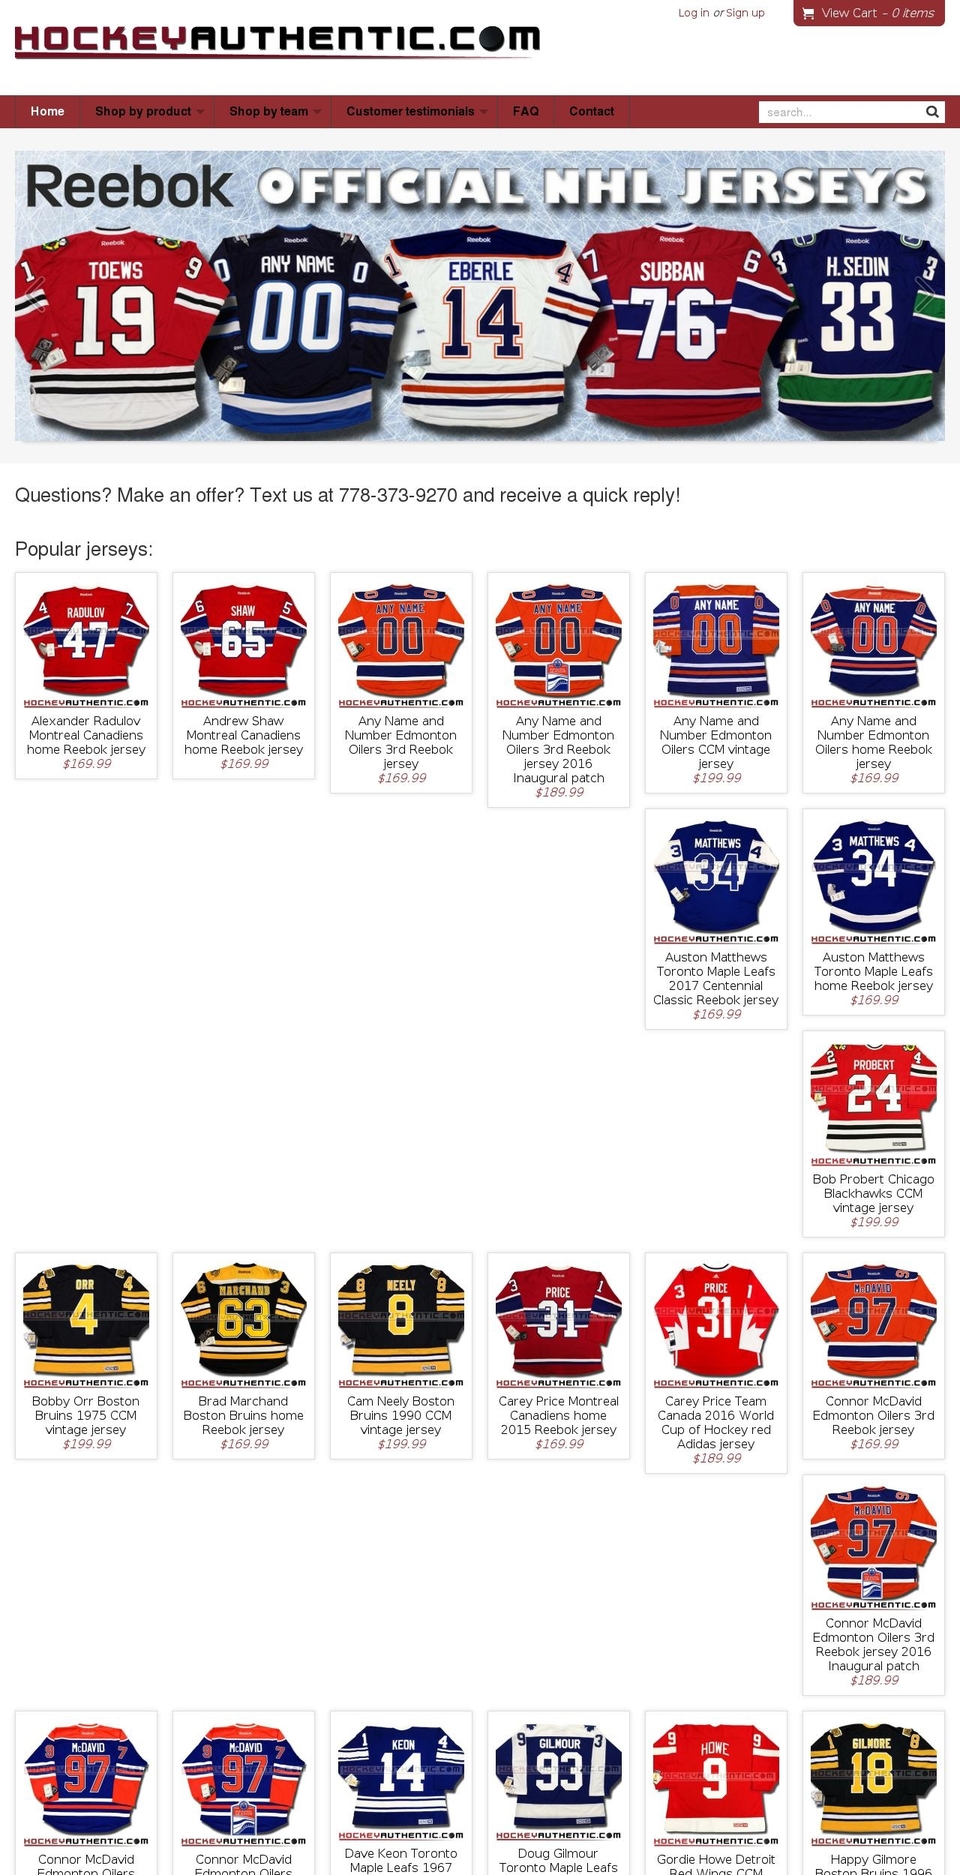 hockeyauthentic.com shopify website screenshot